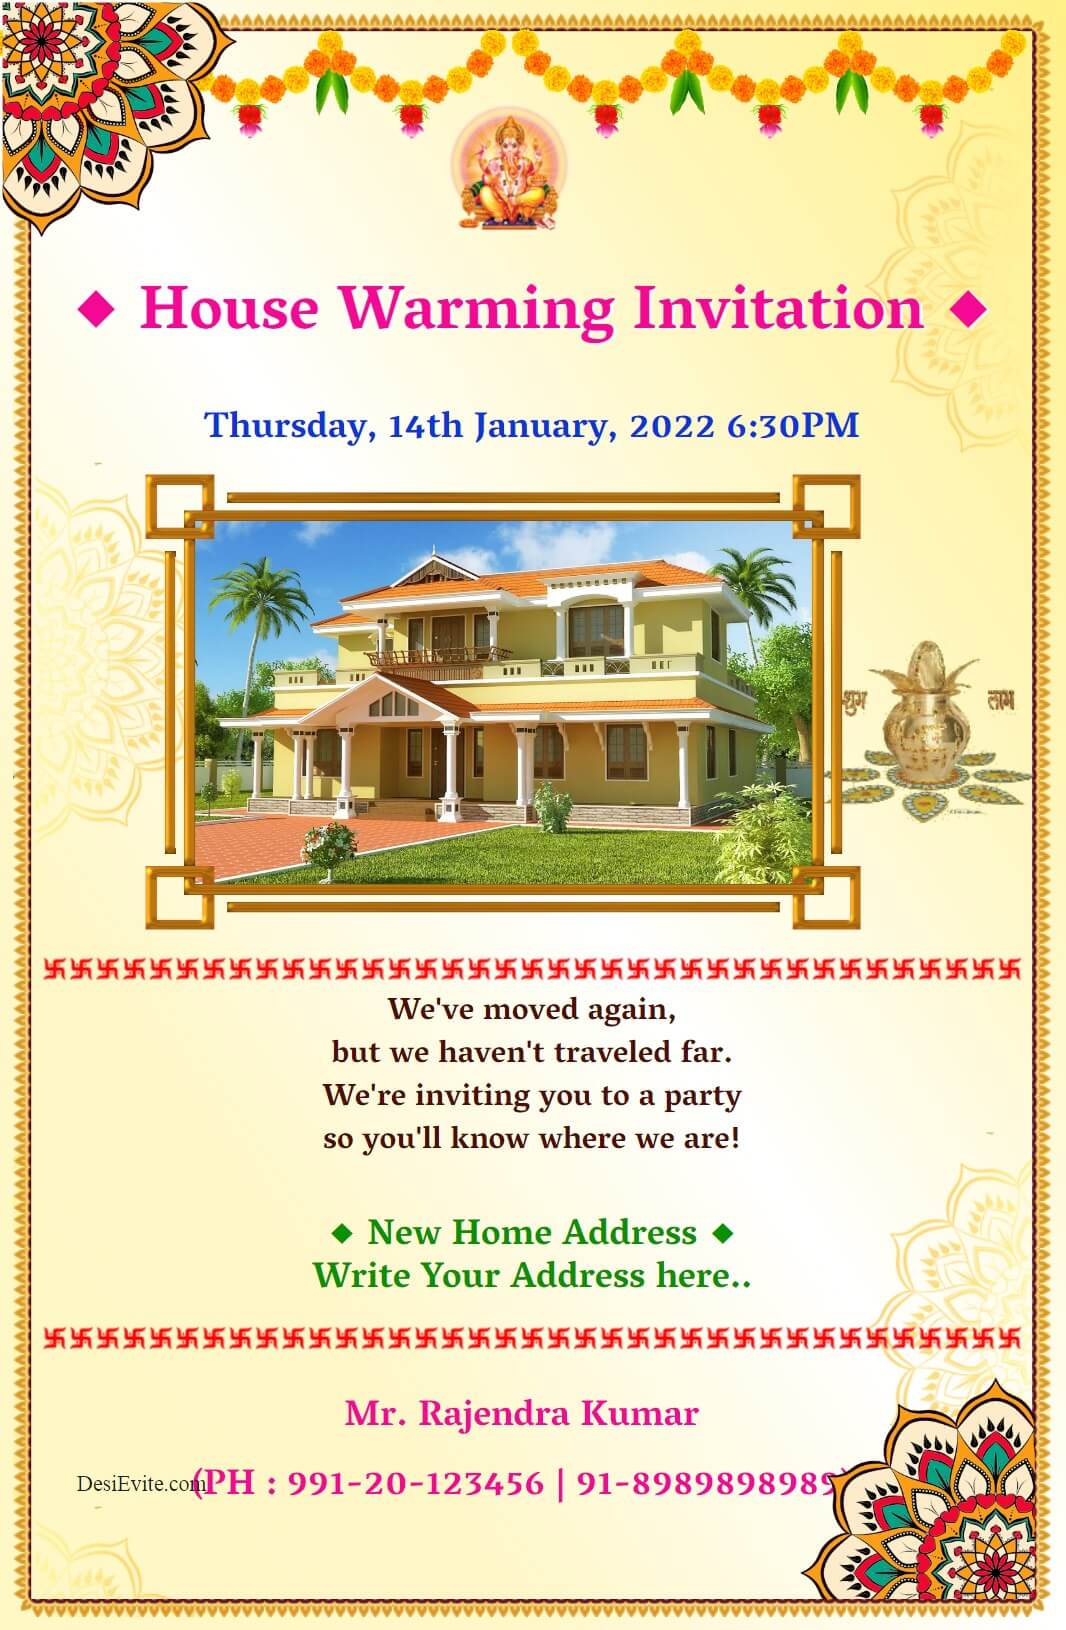 House Warming ecard - Traditional Hindu Griha Pravesh invitation theme